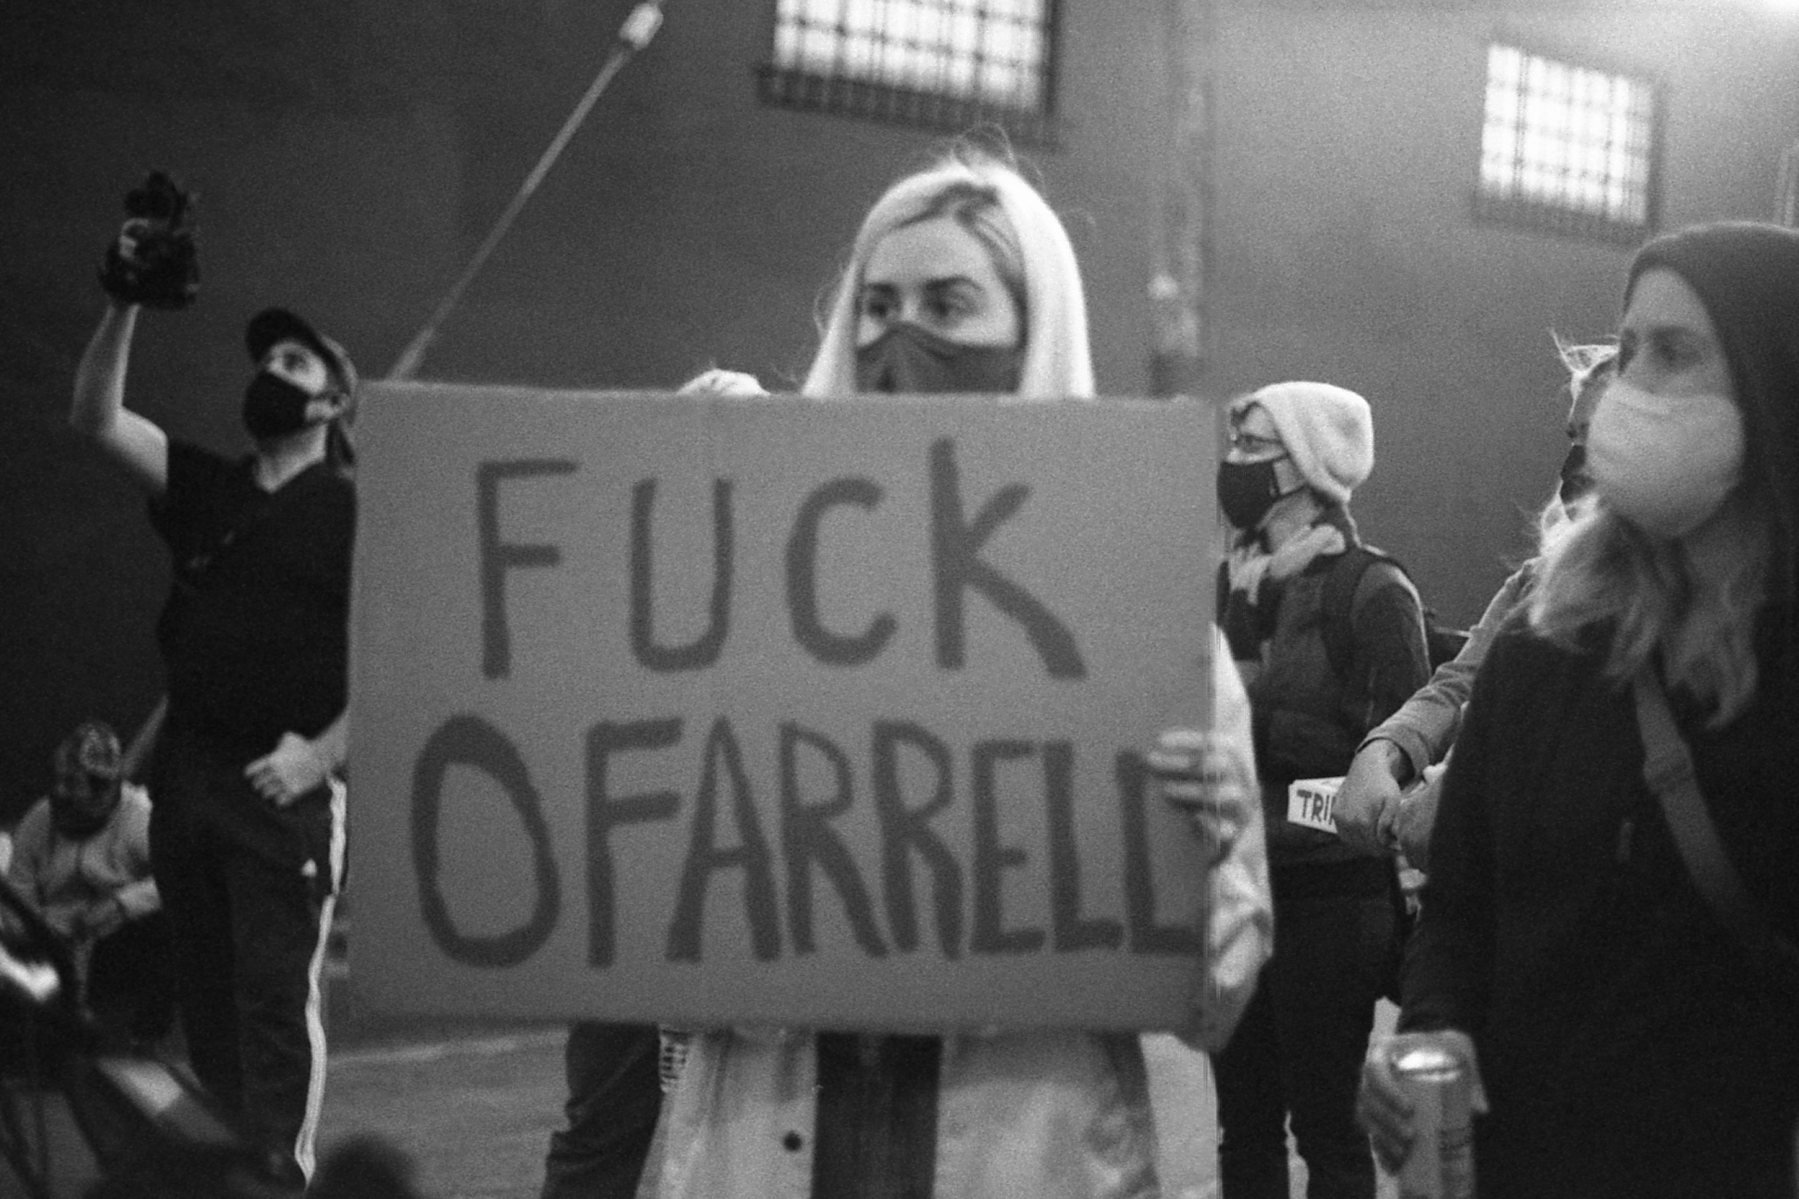 "Fuck O'Ferrell" 